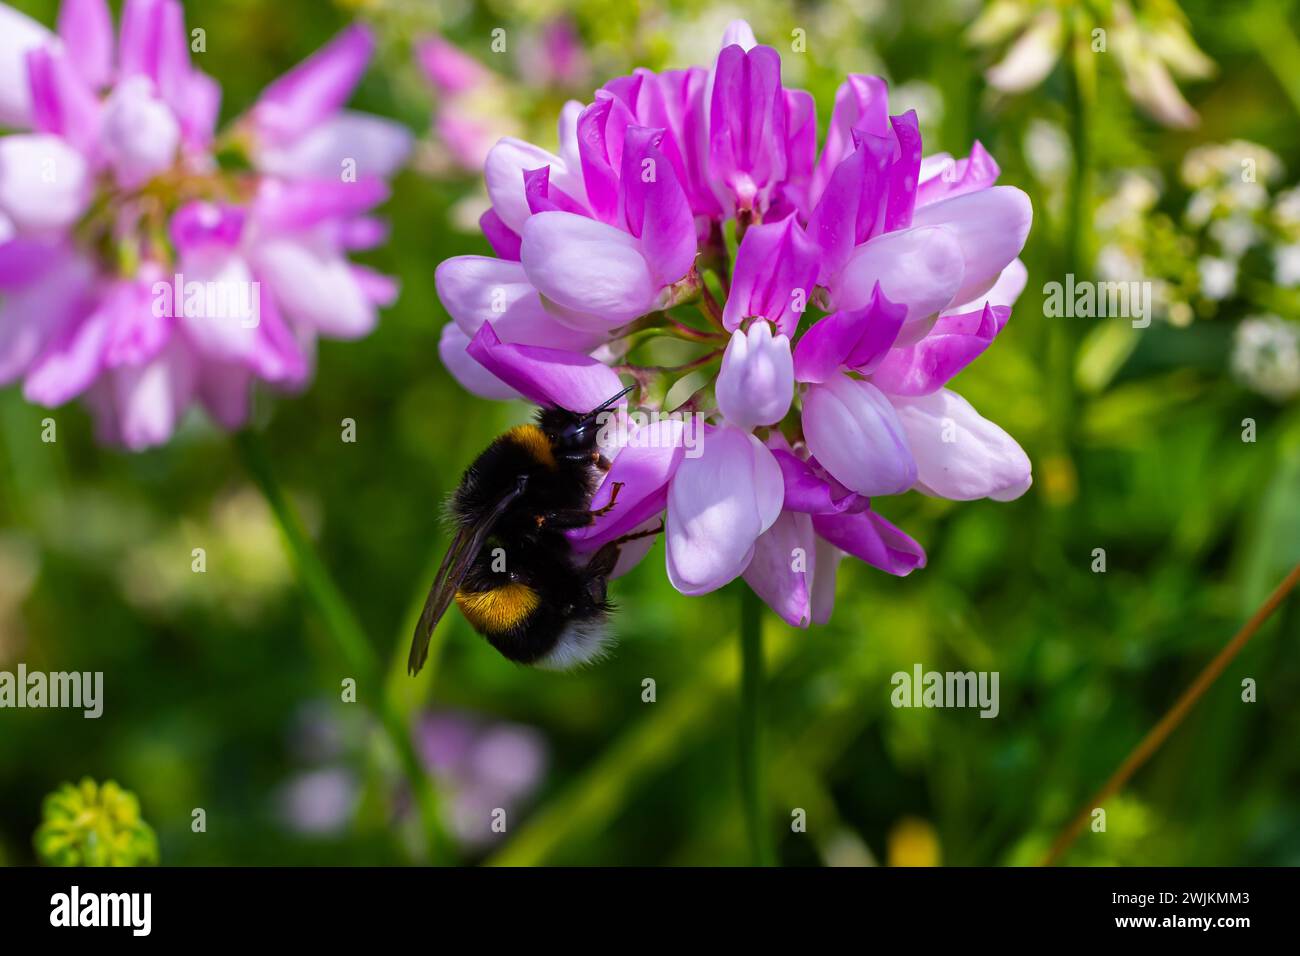 Closeup on a European small garden bumblebee, Bombus hortorum, drinking nectar form a purple thistle flower. Stock Photo